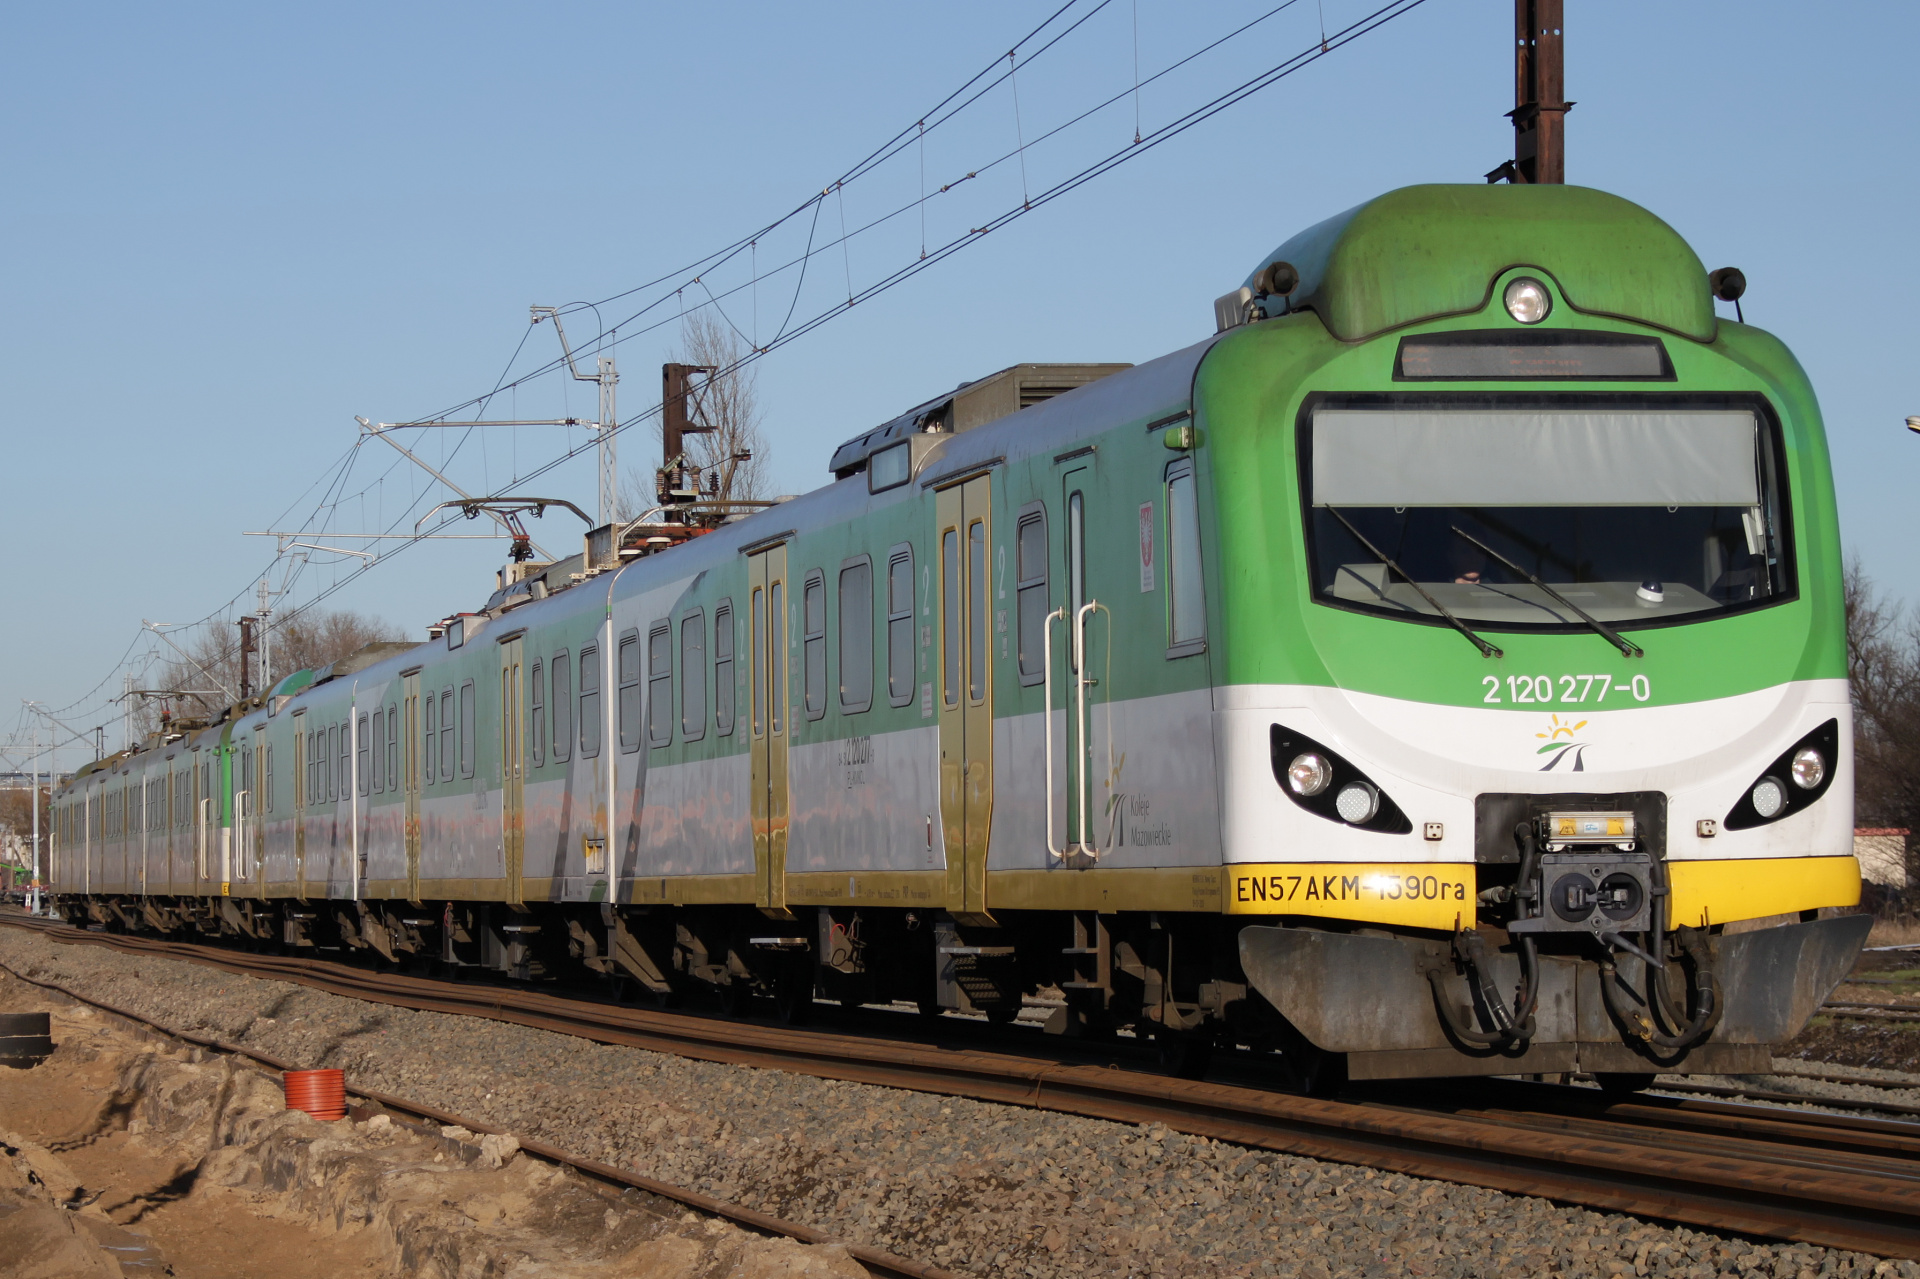 EN57AKM-1590 (Vehicles » Trains and Locomotives » Pafawag 5B/6B EN57 and revisions)